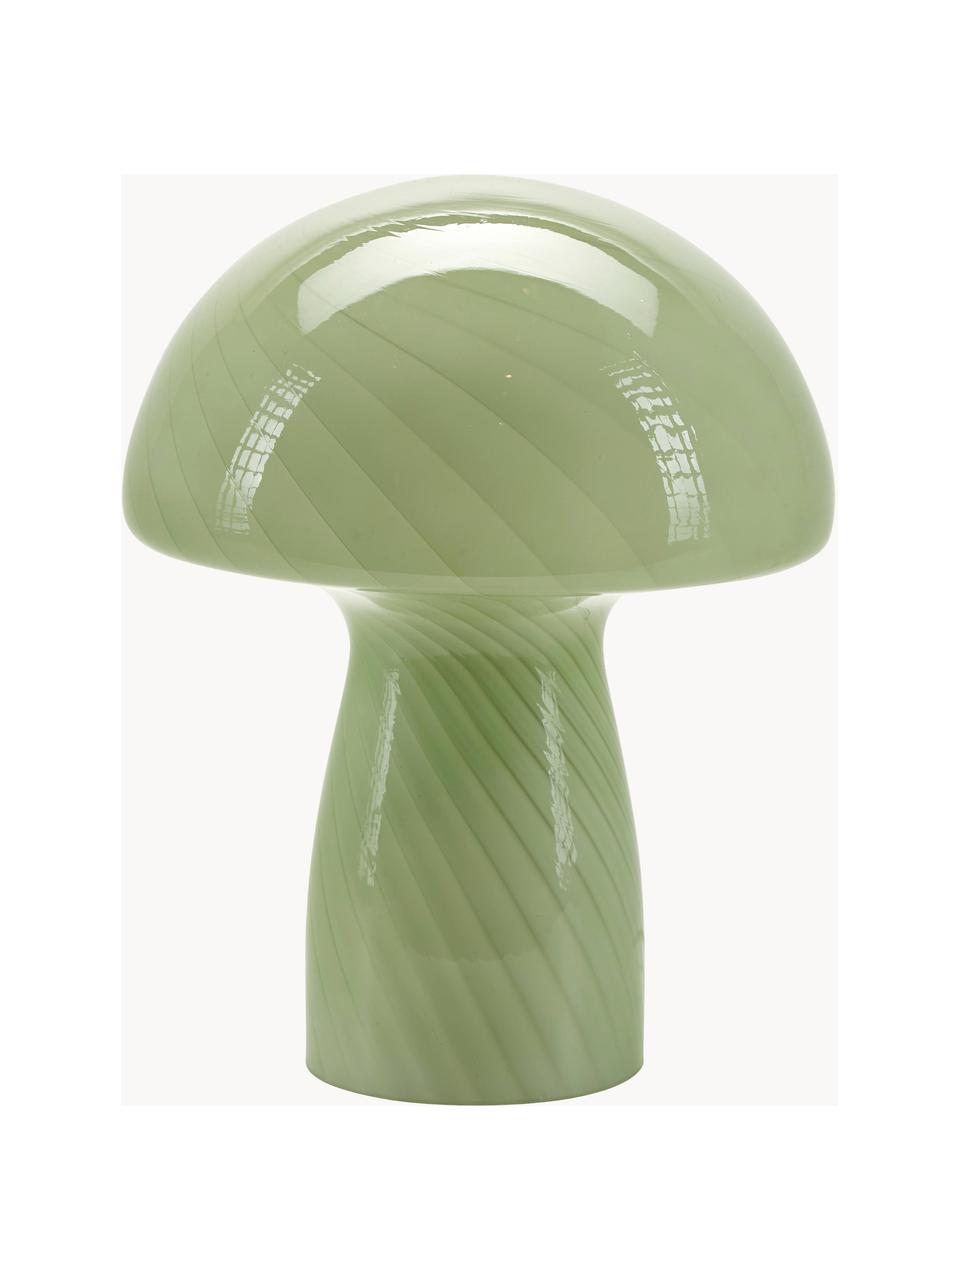 Lampada da tavolo piccola in vetro Mushroom, Lampada: vetro, Verde chiaro, Ø 19 x Alt. 23 cm